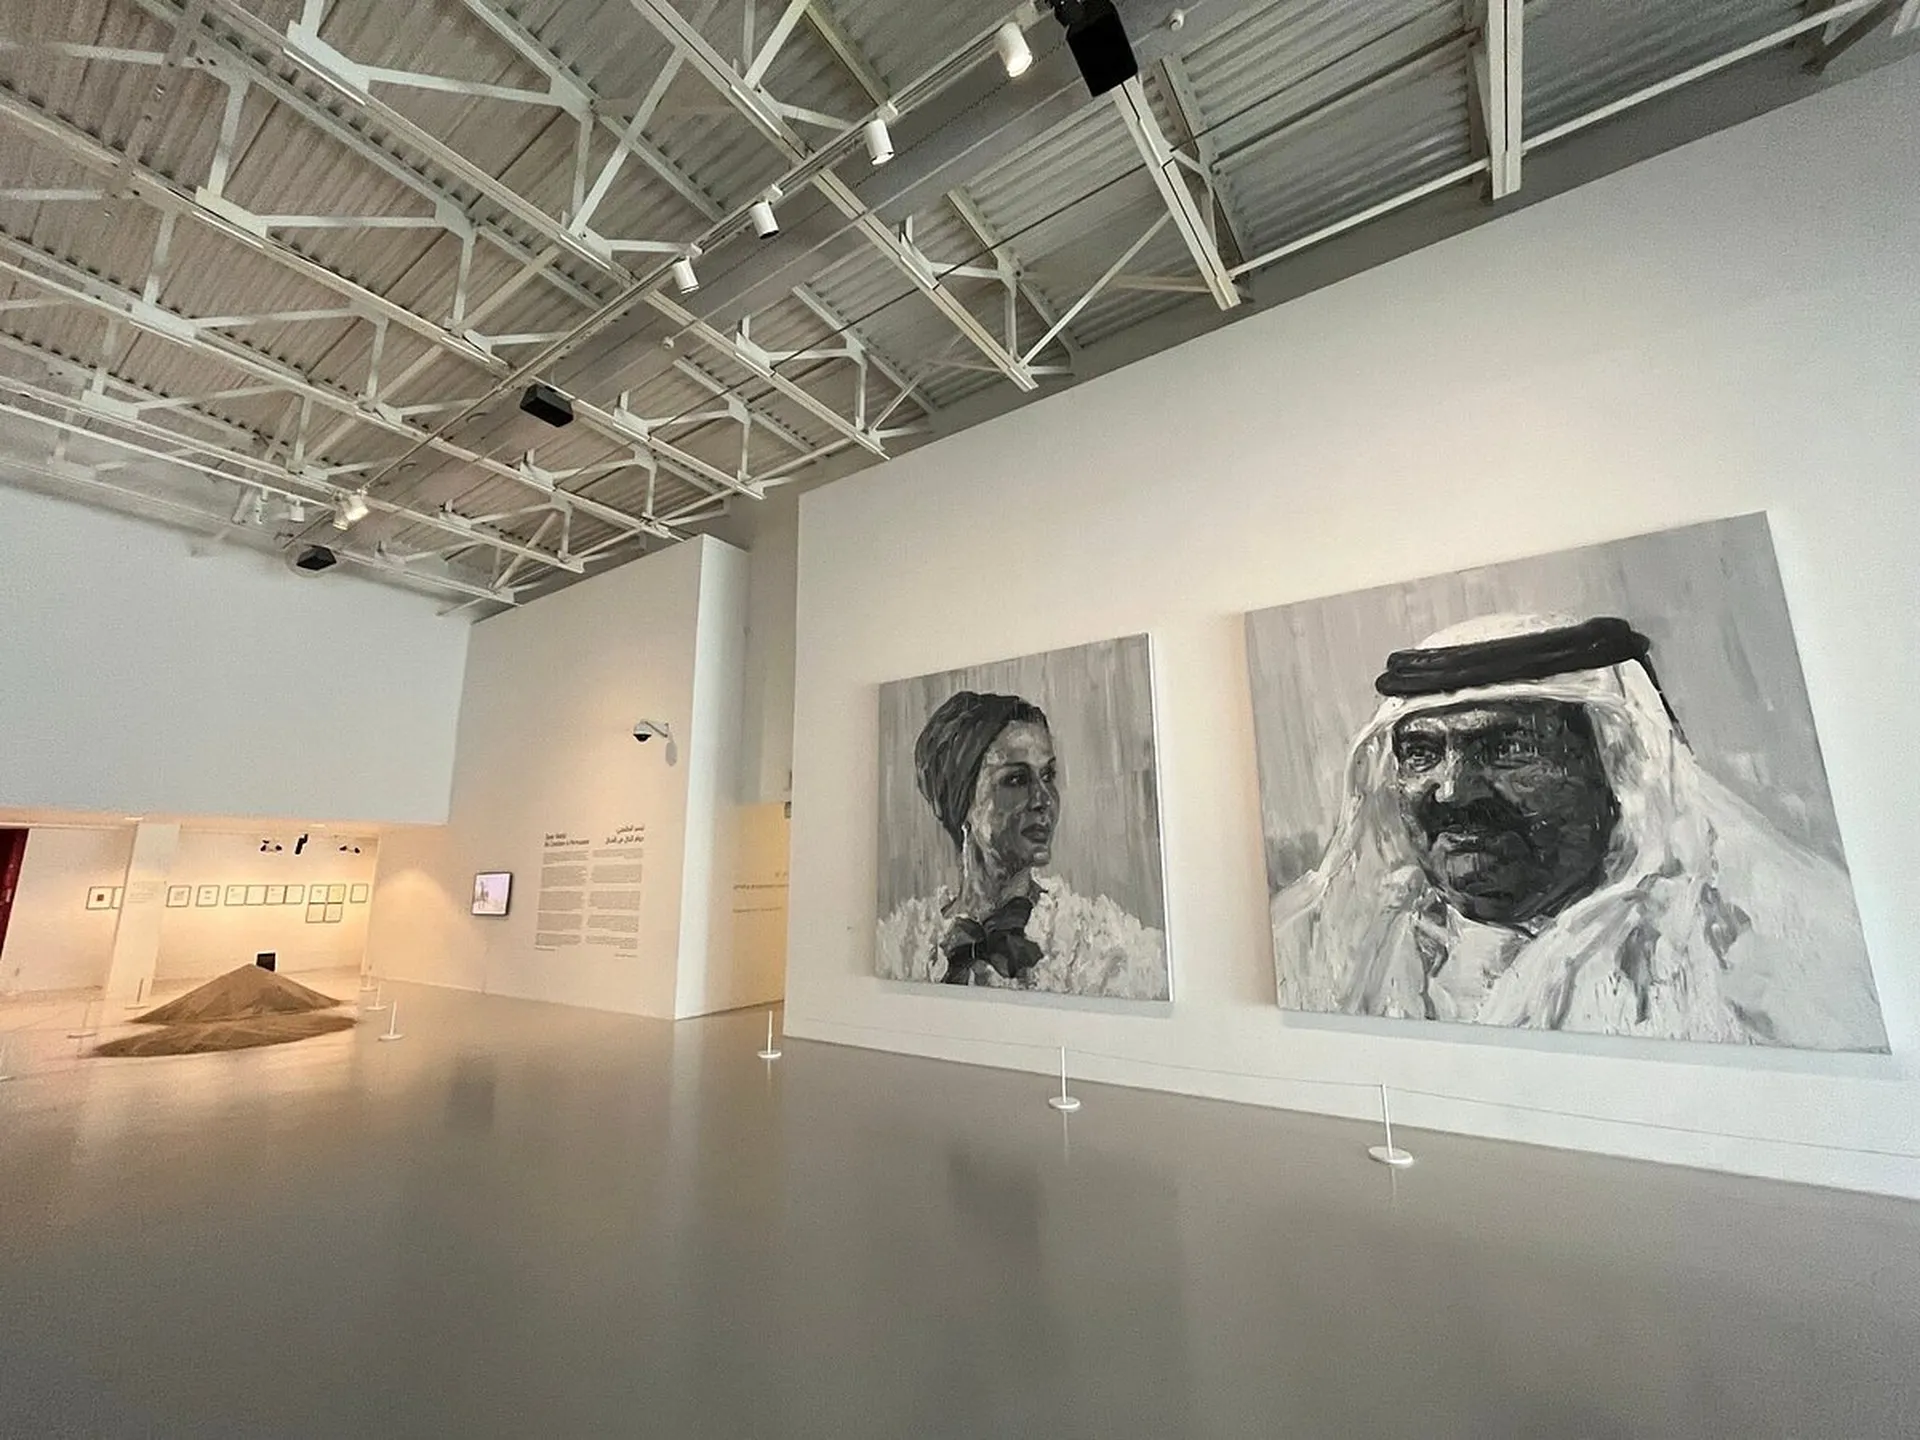 Mathaf : Arab Museum of Modern Art